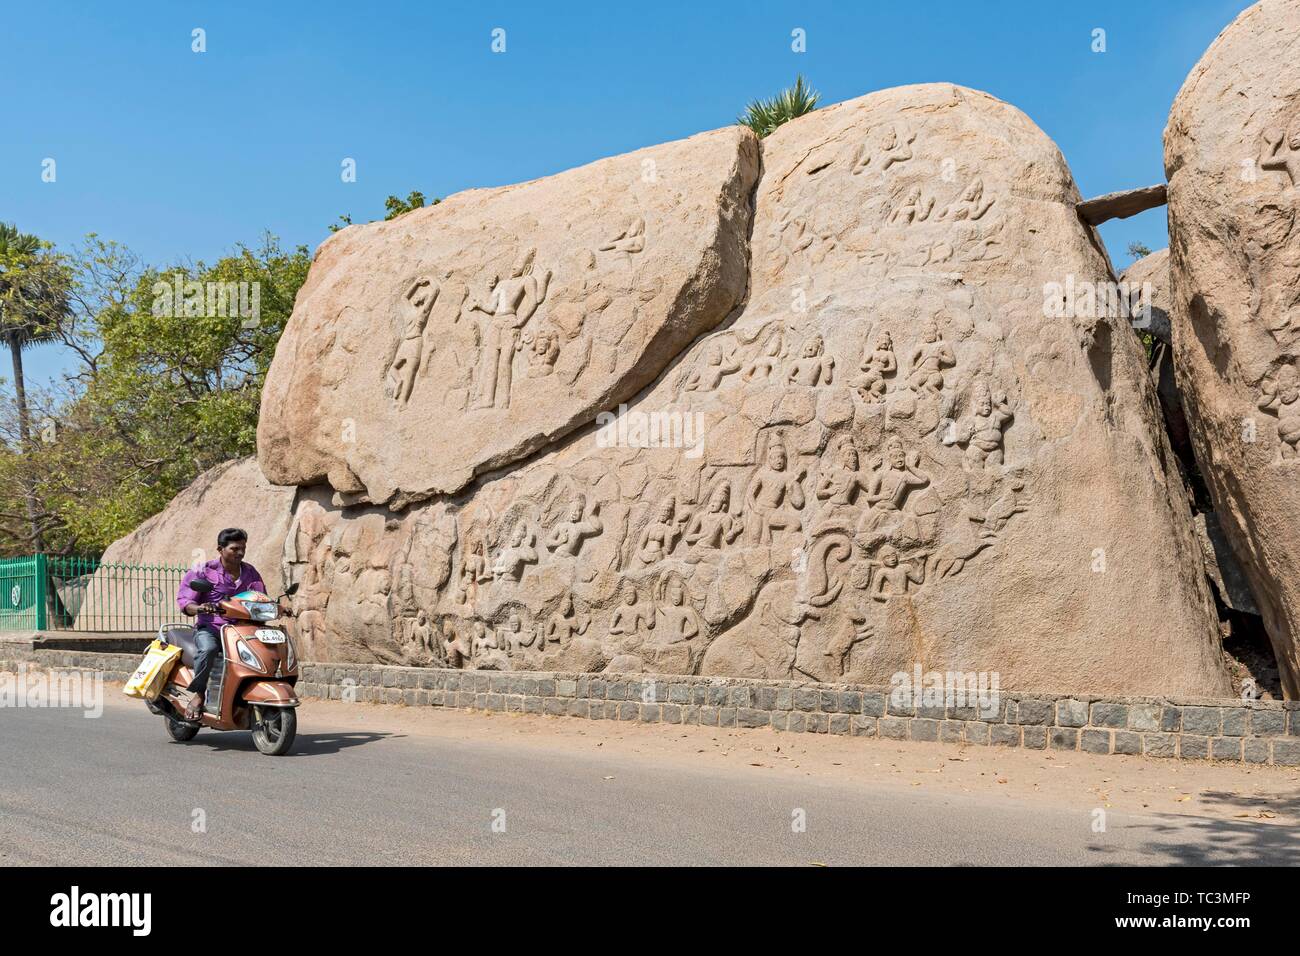 Man on motorcycle in front of unfinished stone relief Carving, Mahabalipuram, Mamallapuram, India Stock Photo